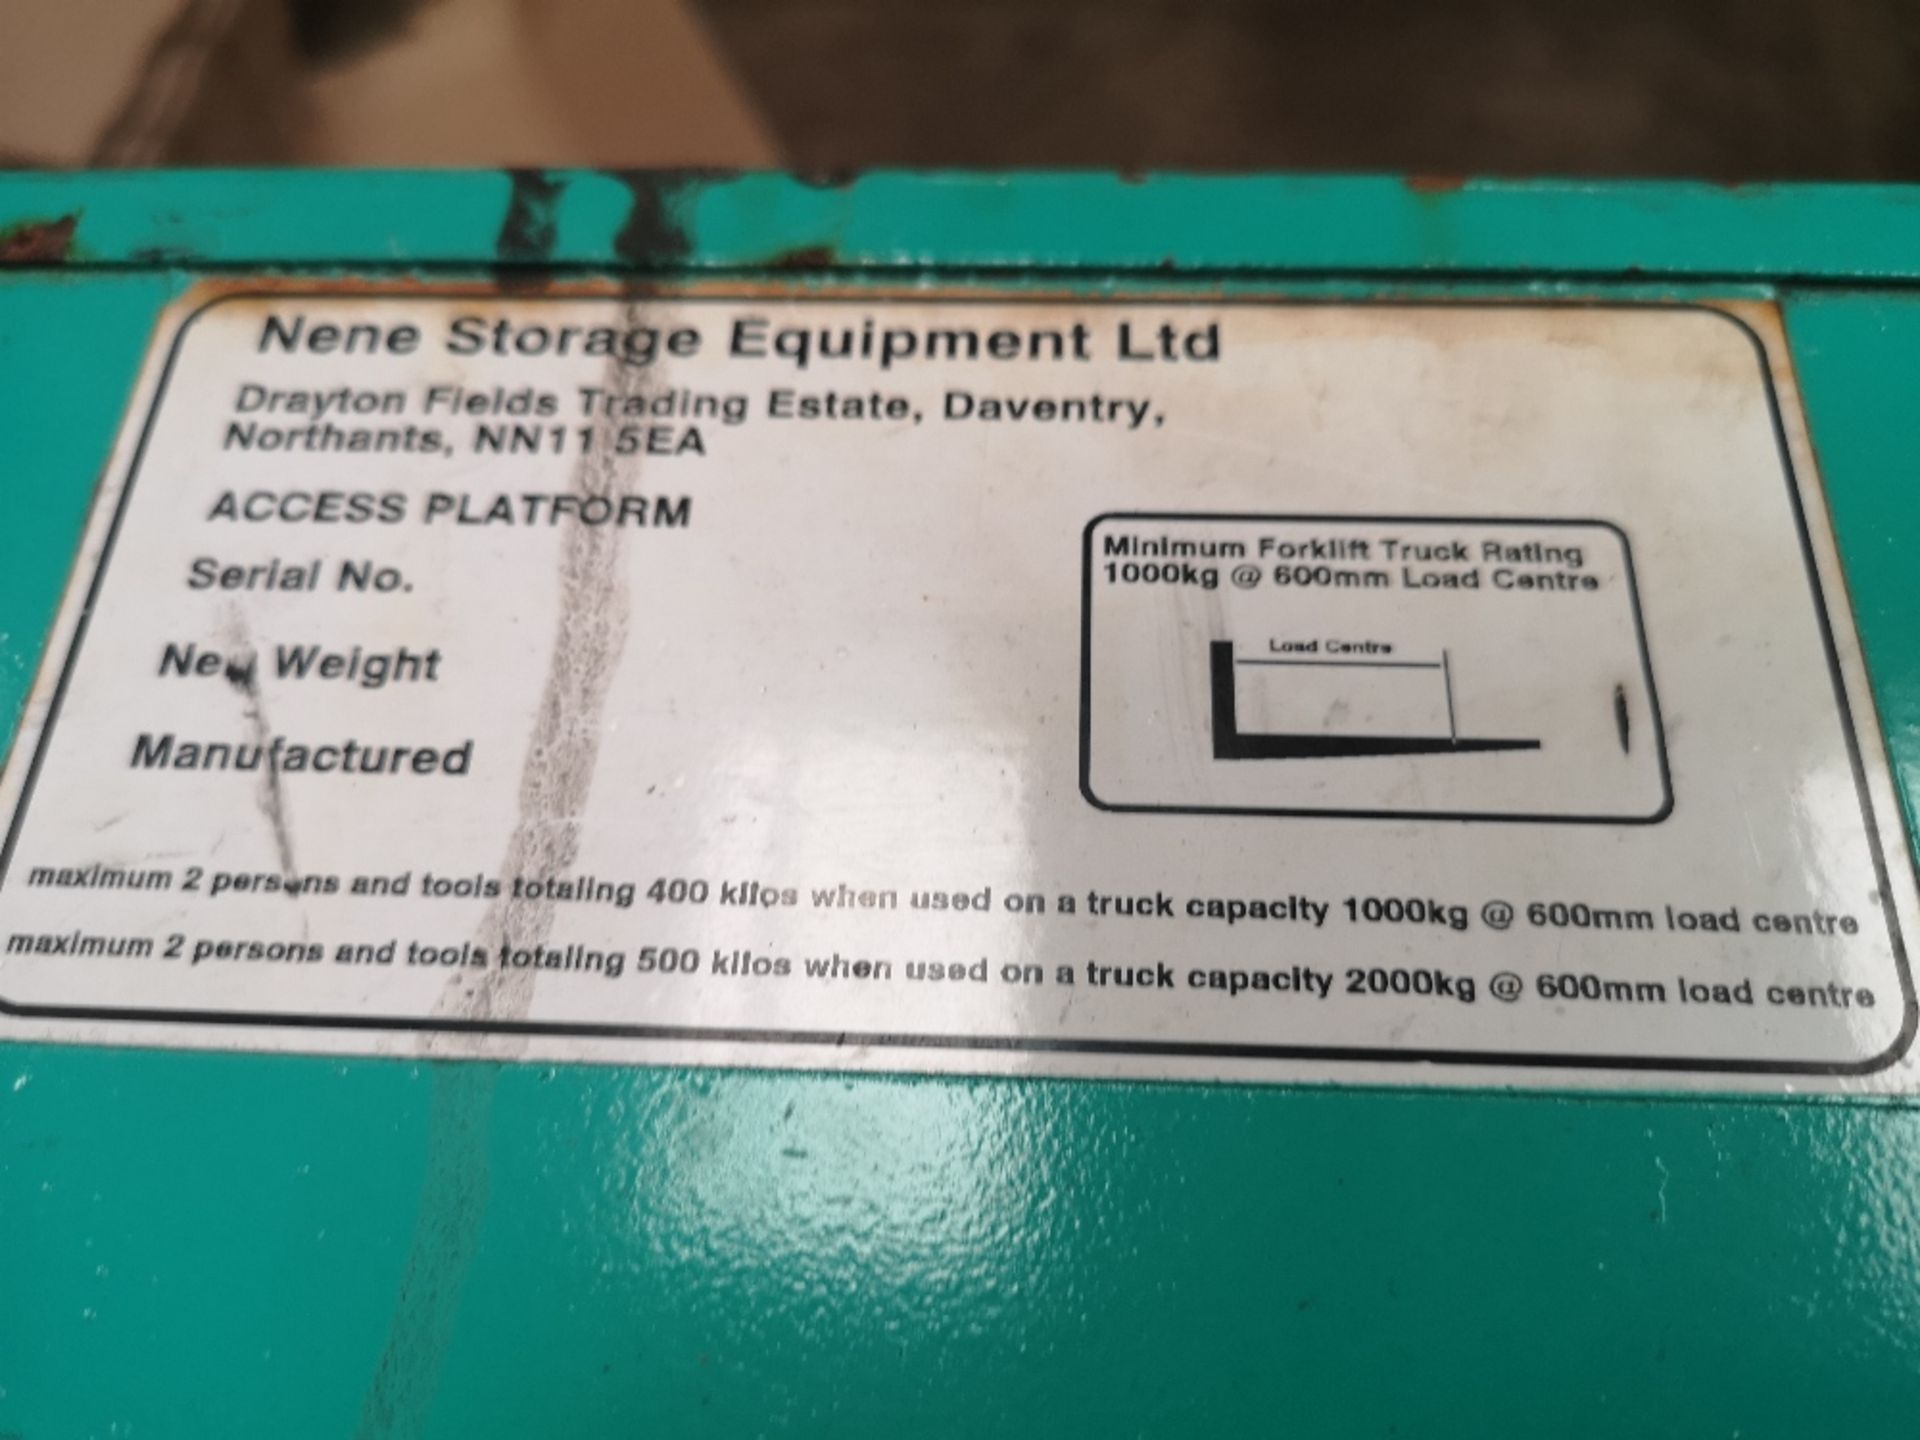 Nene Storage Equipment Steel Forklift Access Platform - Image 2 of 2